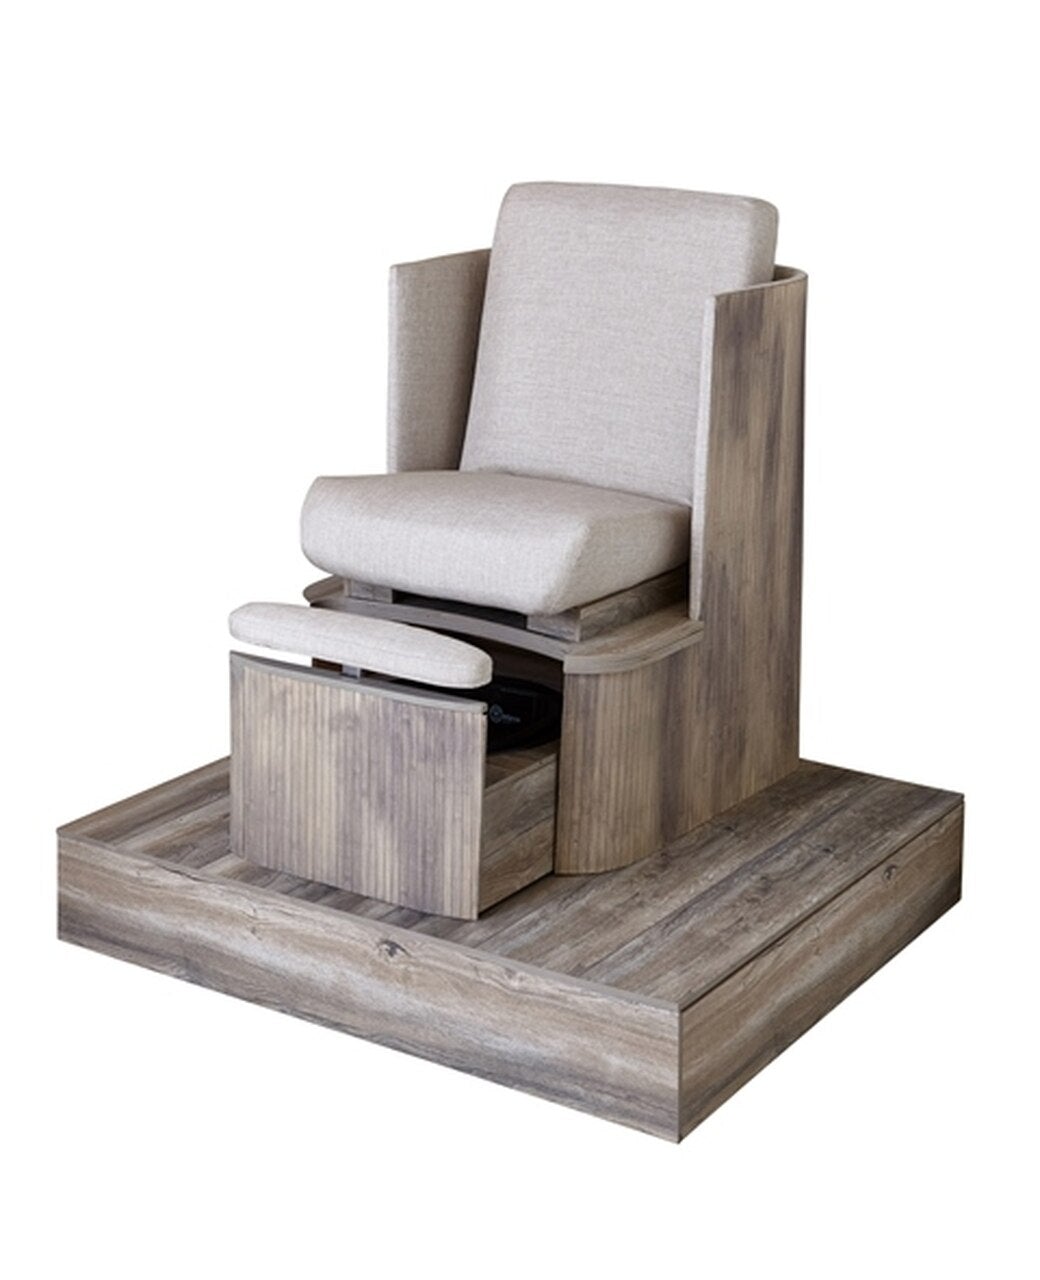 Dorset Pedicure Chair with Platform